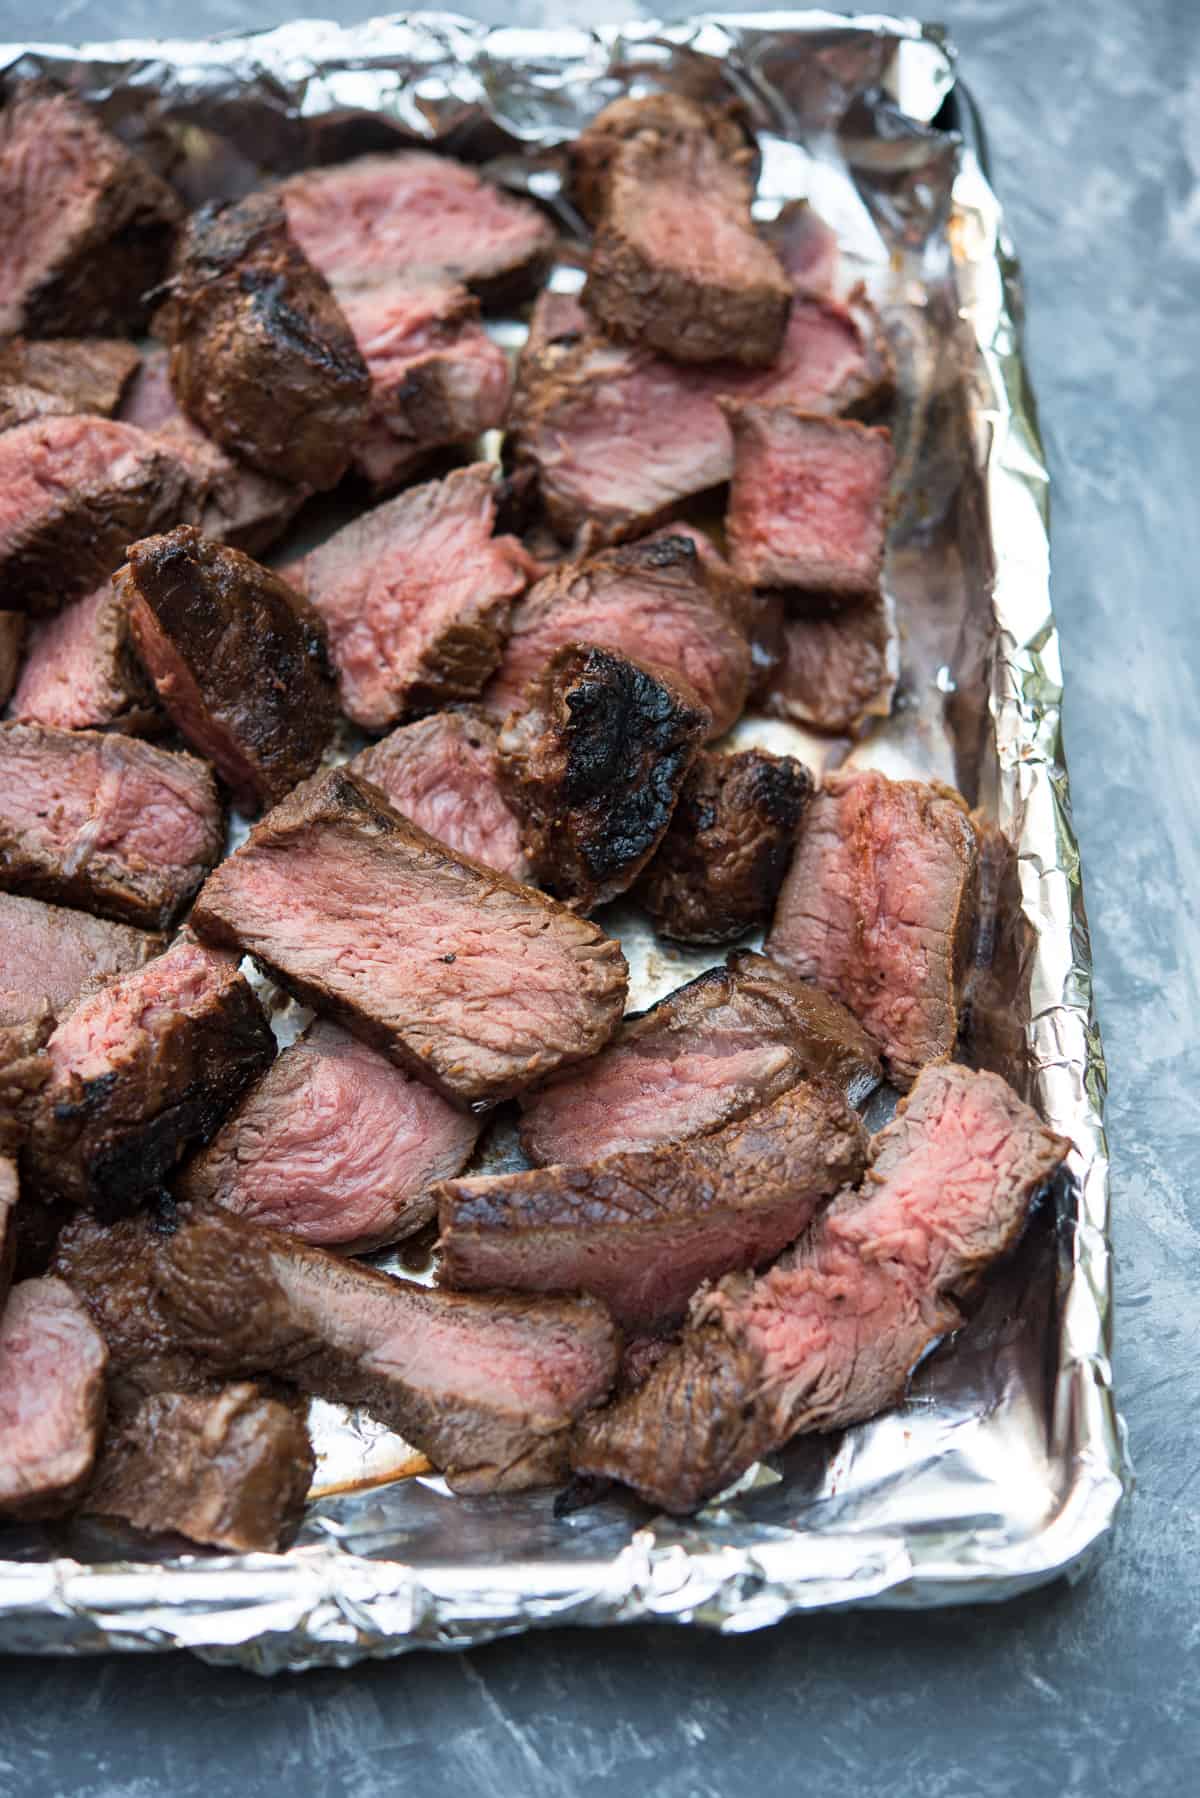 Sliced steak on a foil-lined baking sheet.